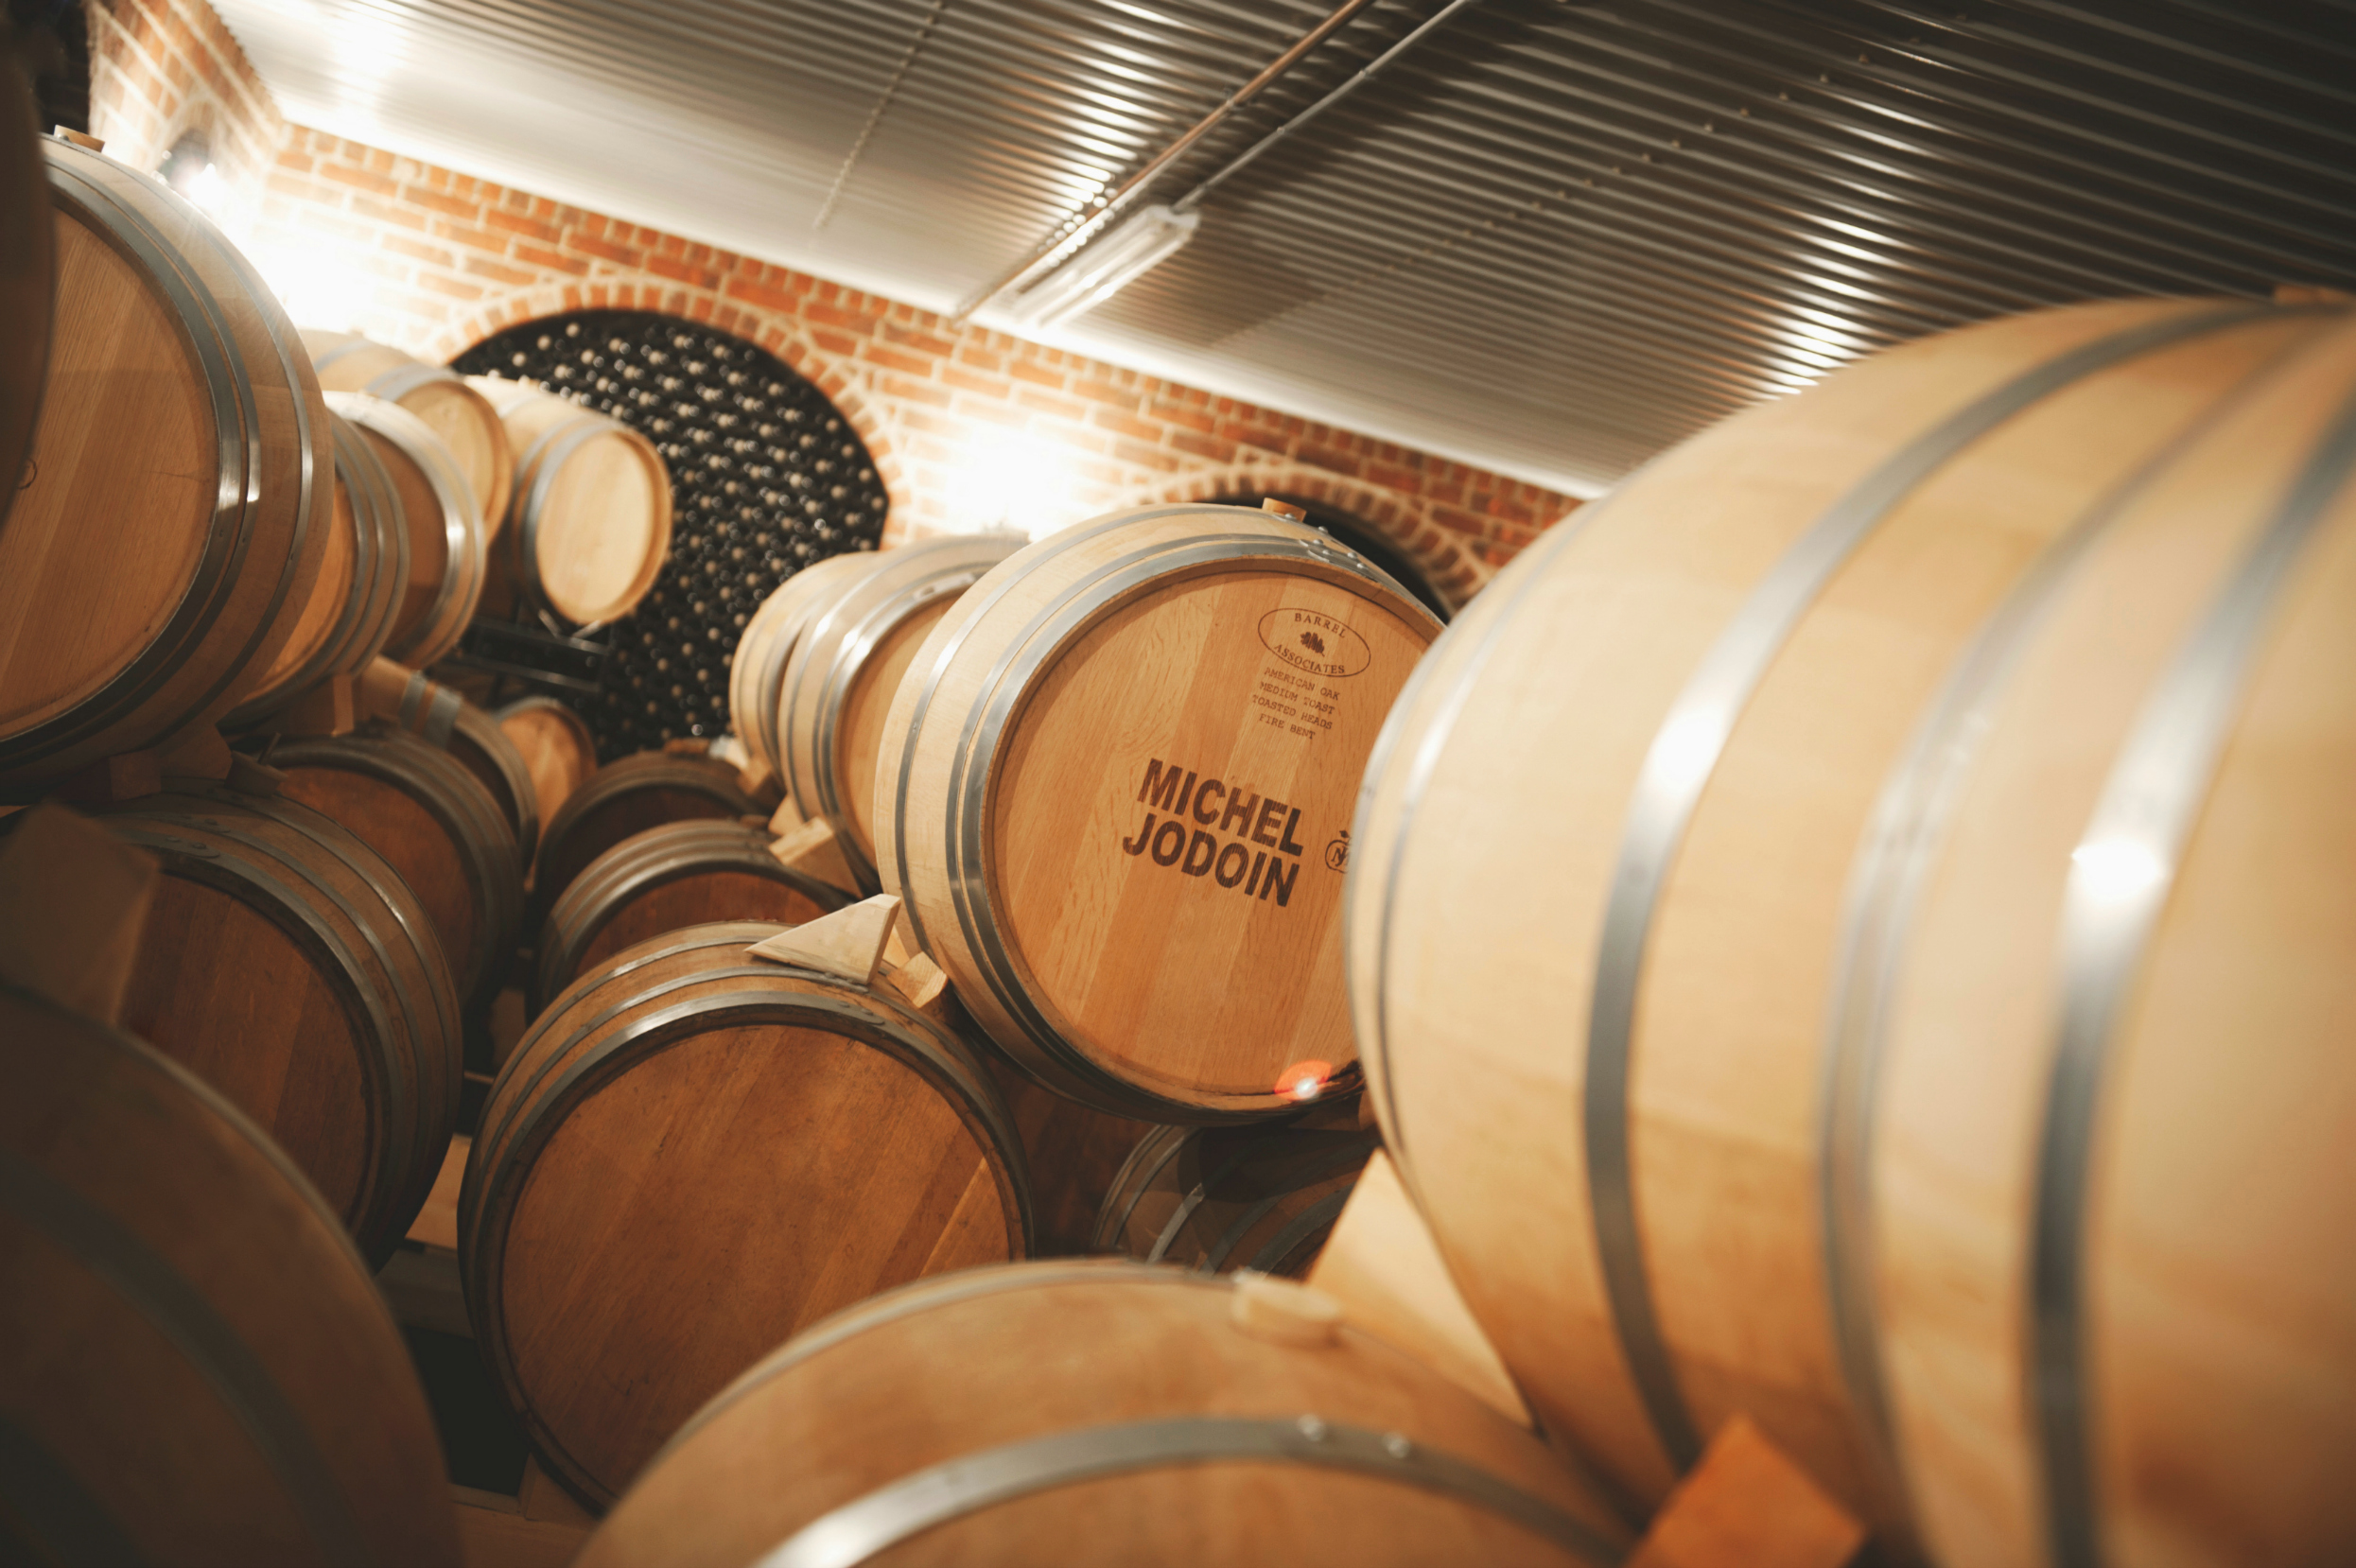 Wine Barrels from Michel Jodoin